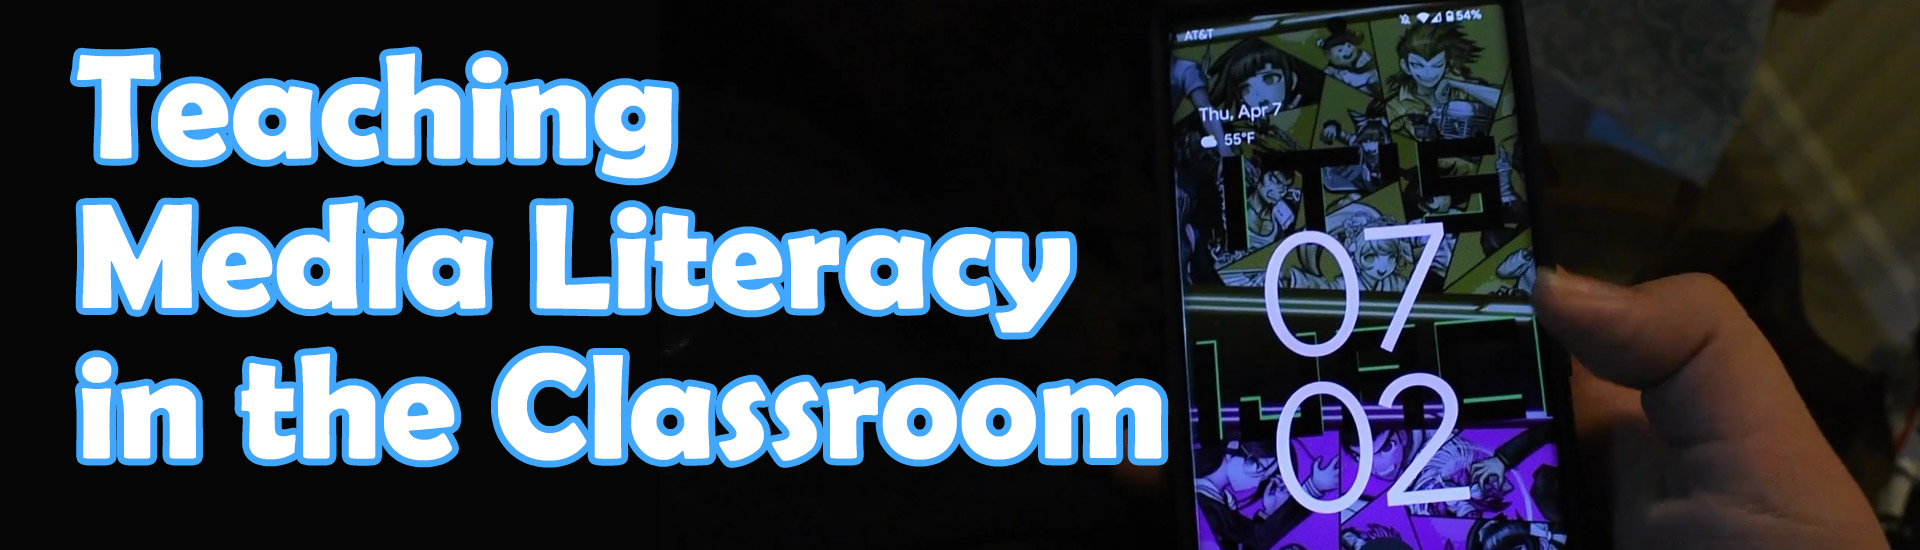 Teaching Media Literacy in the Classroom